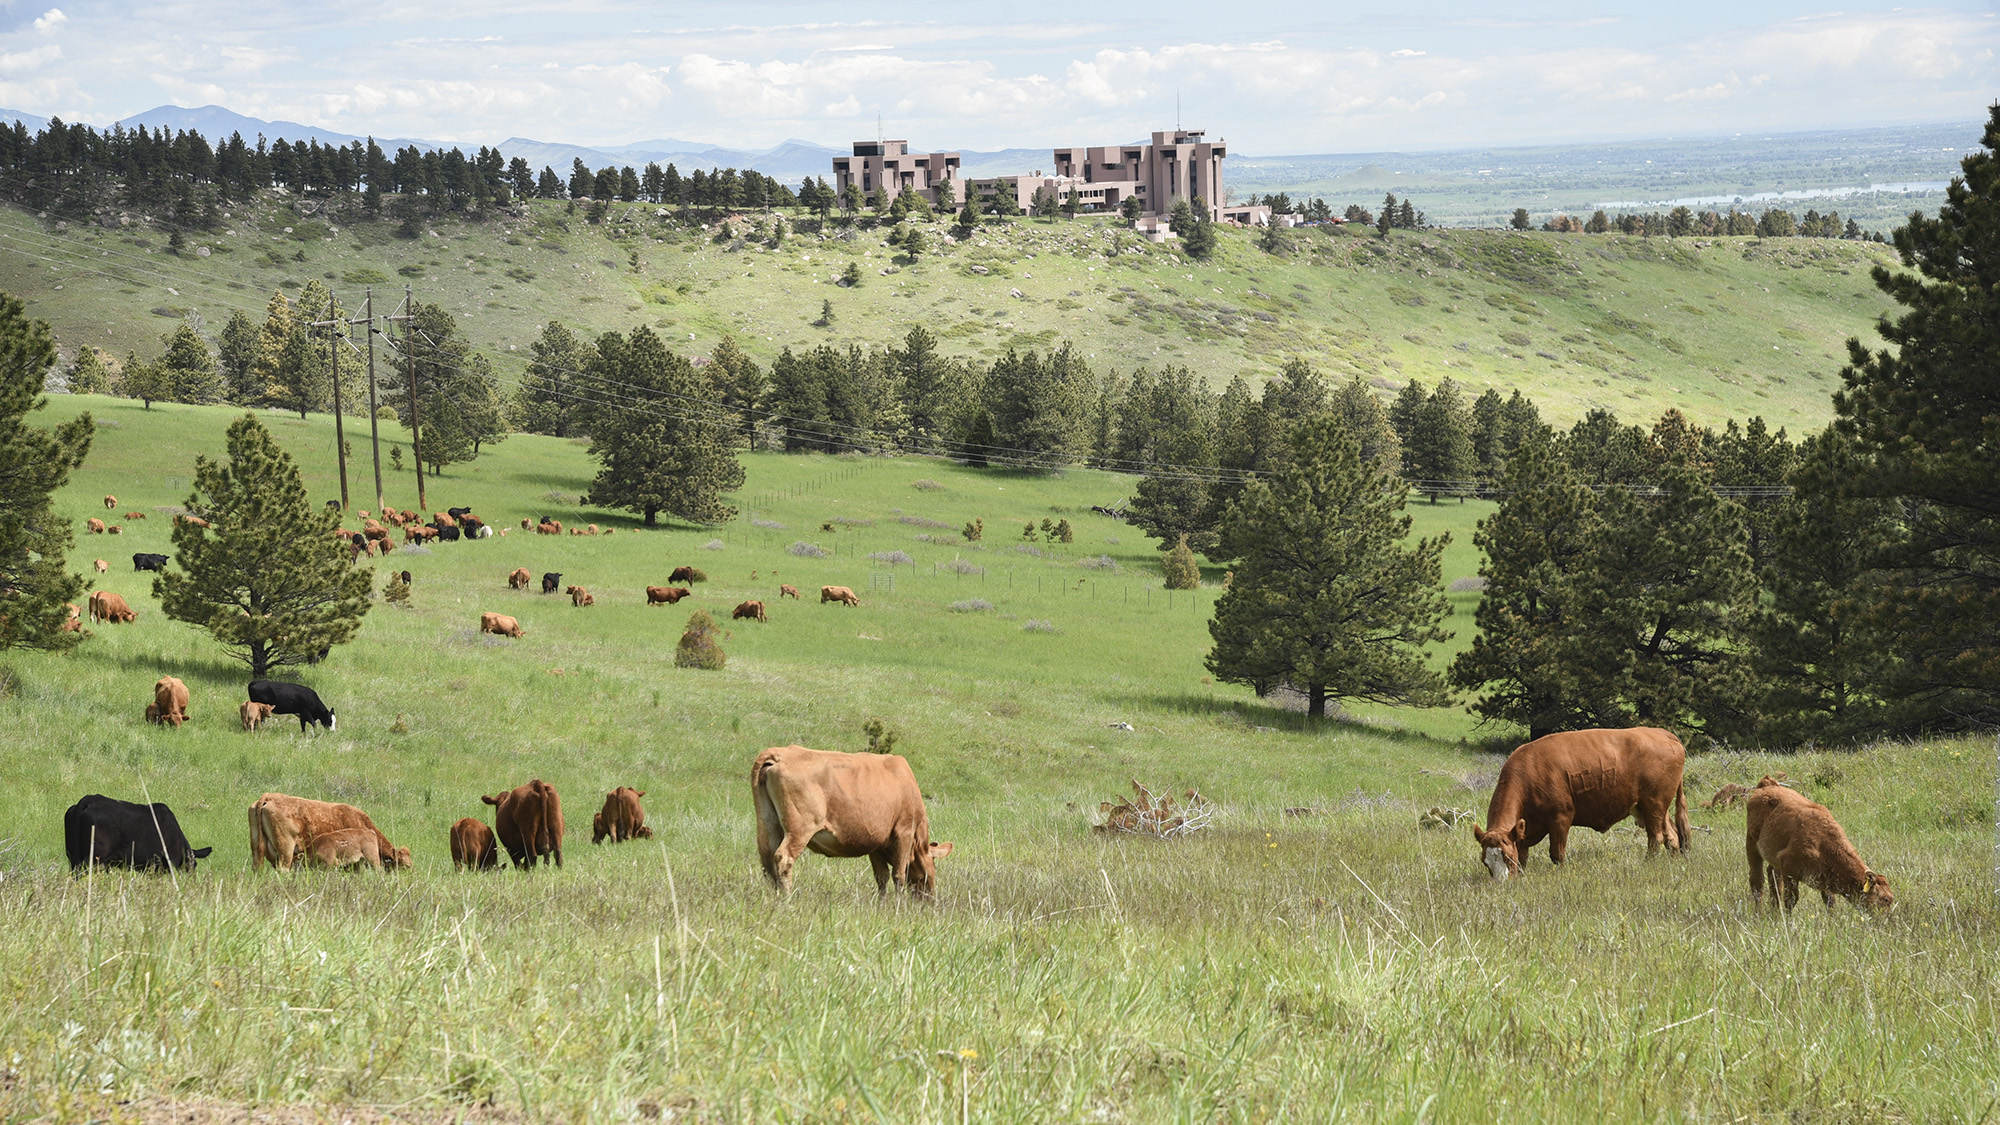 Livestock grazing in the NCAR area